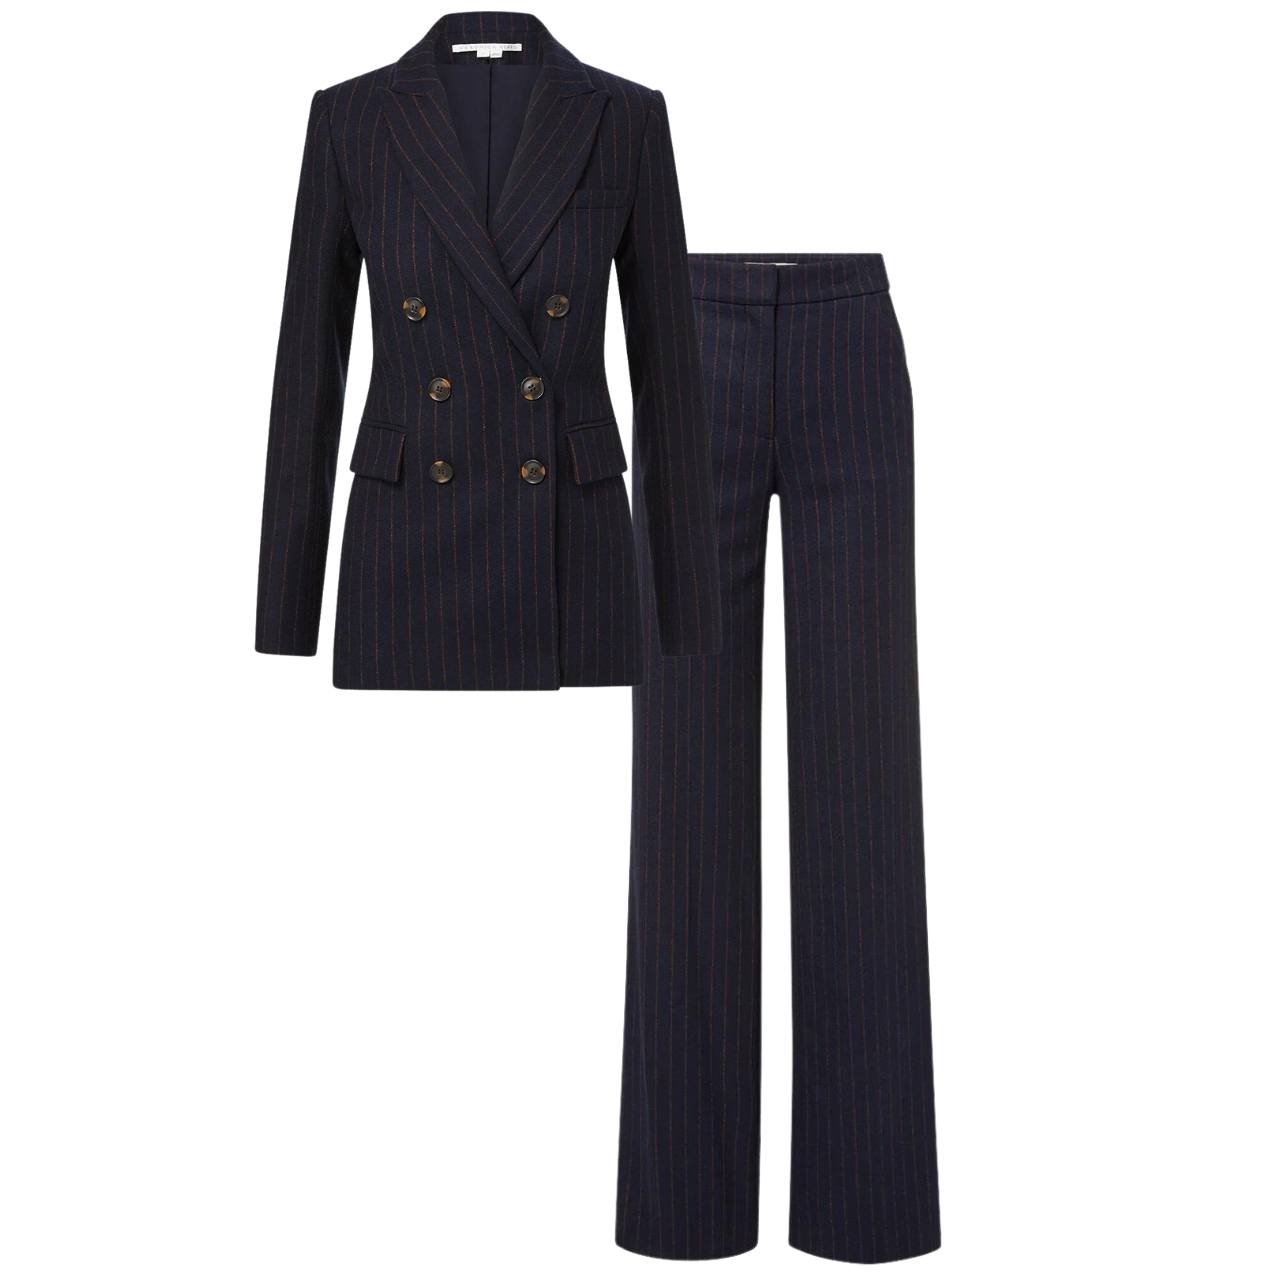 Veronica Beard navy pinstripe matching pantsuit